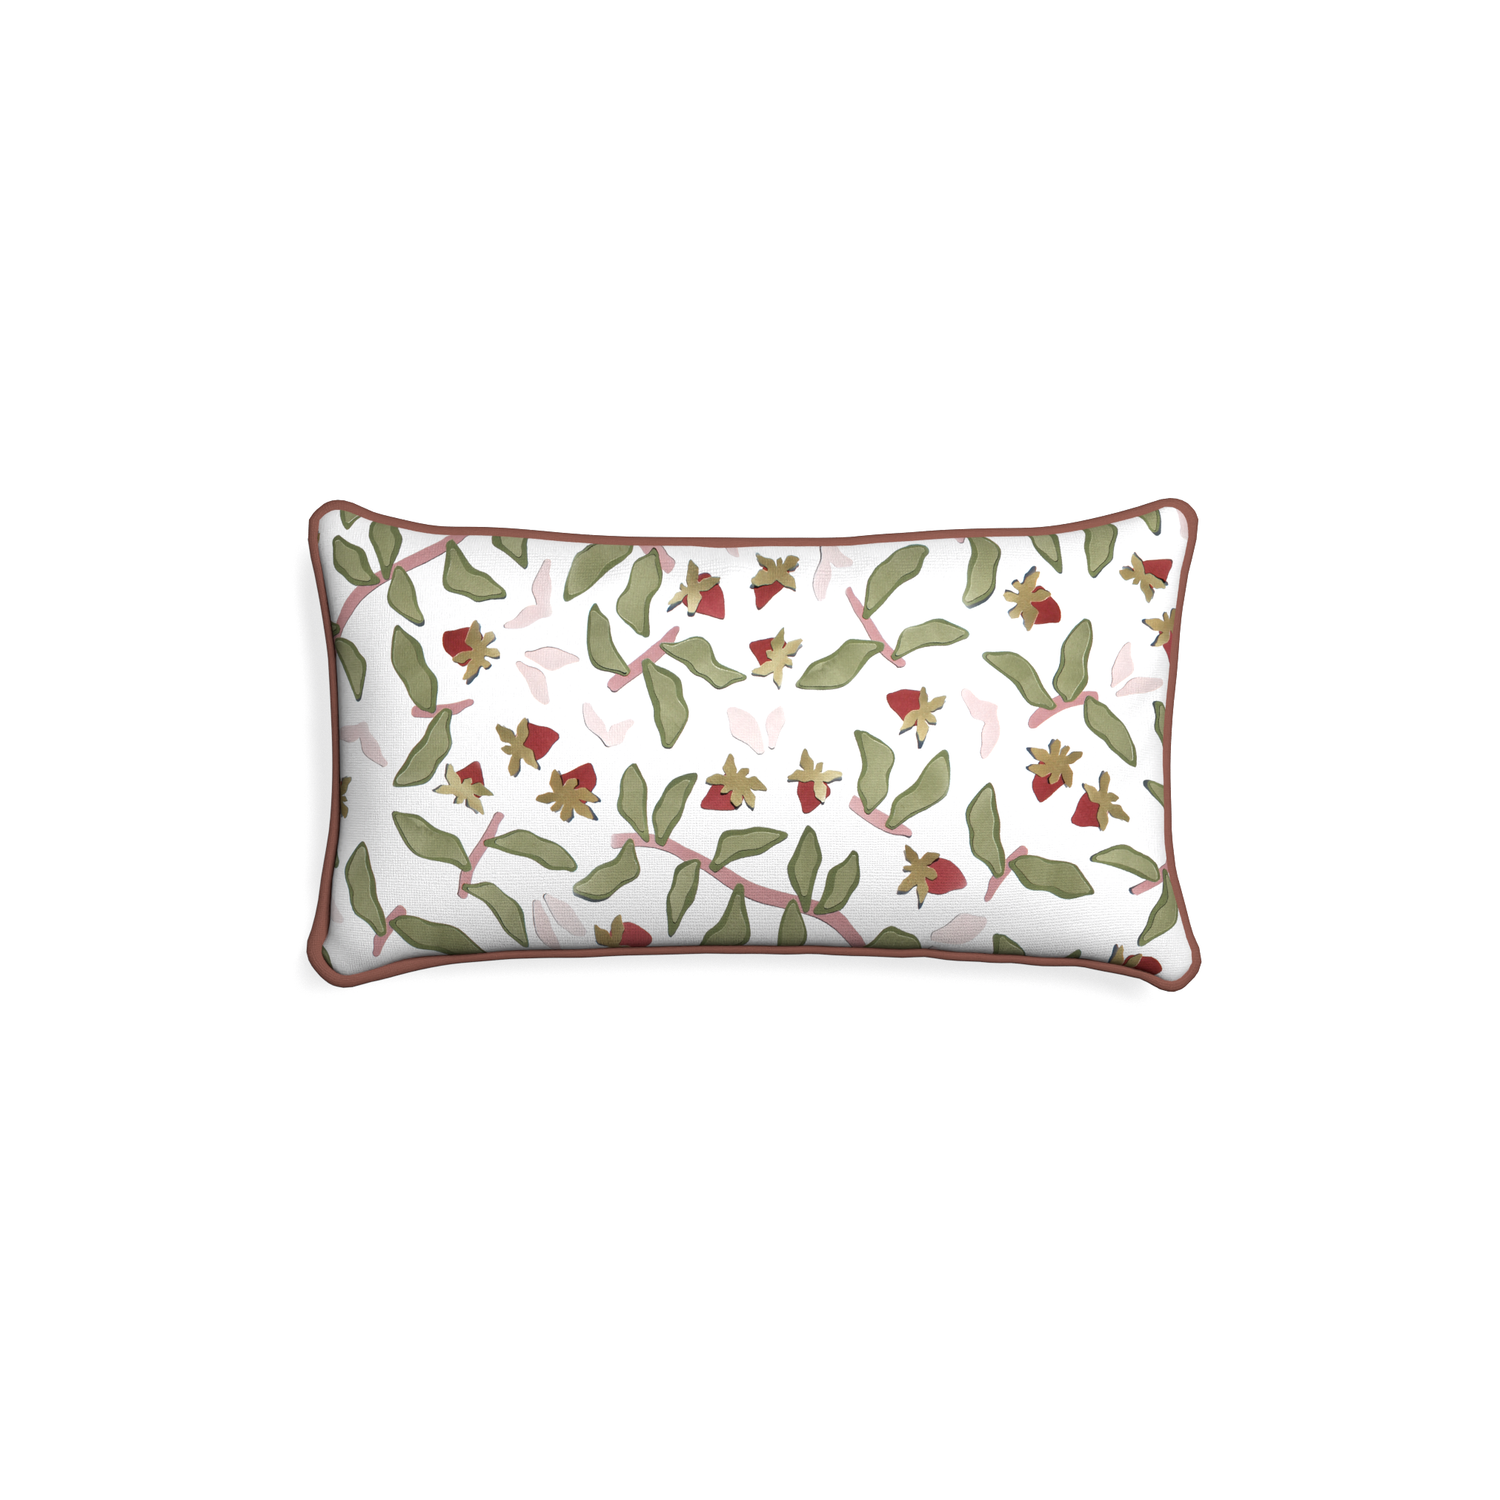 Petite-lumbar nellie custom strawberry & botanicalpillow with w piping on white background